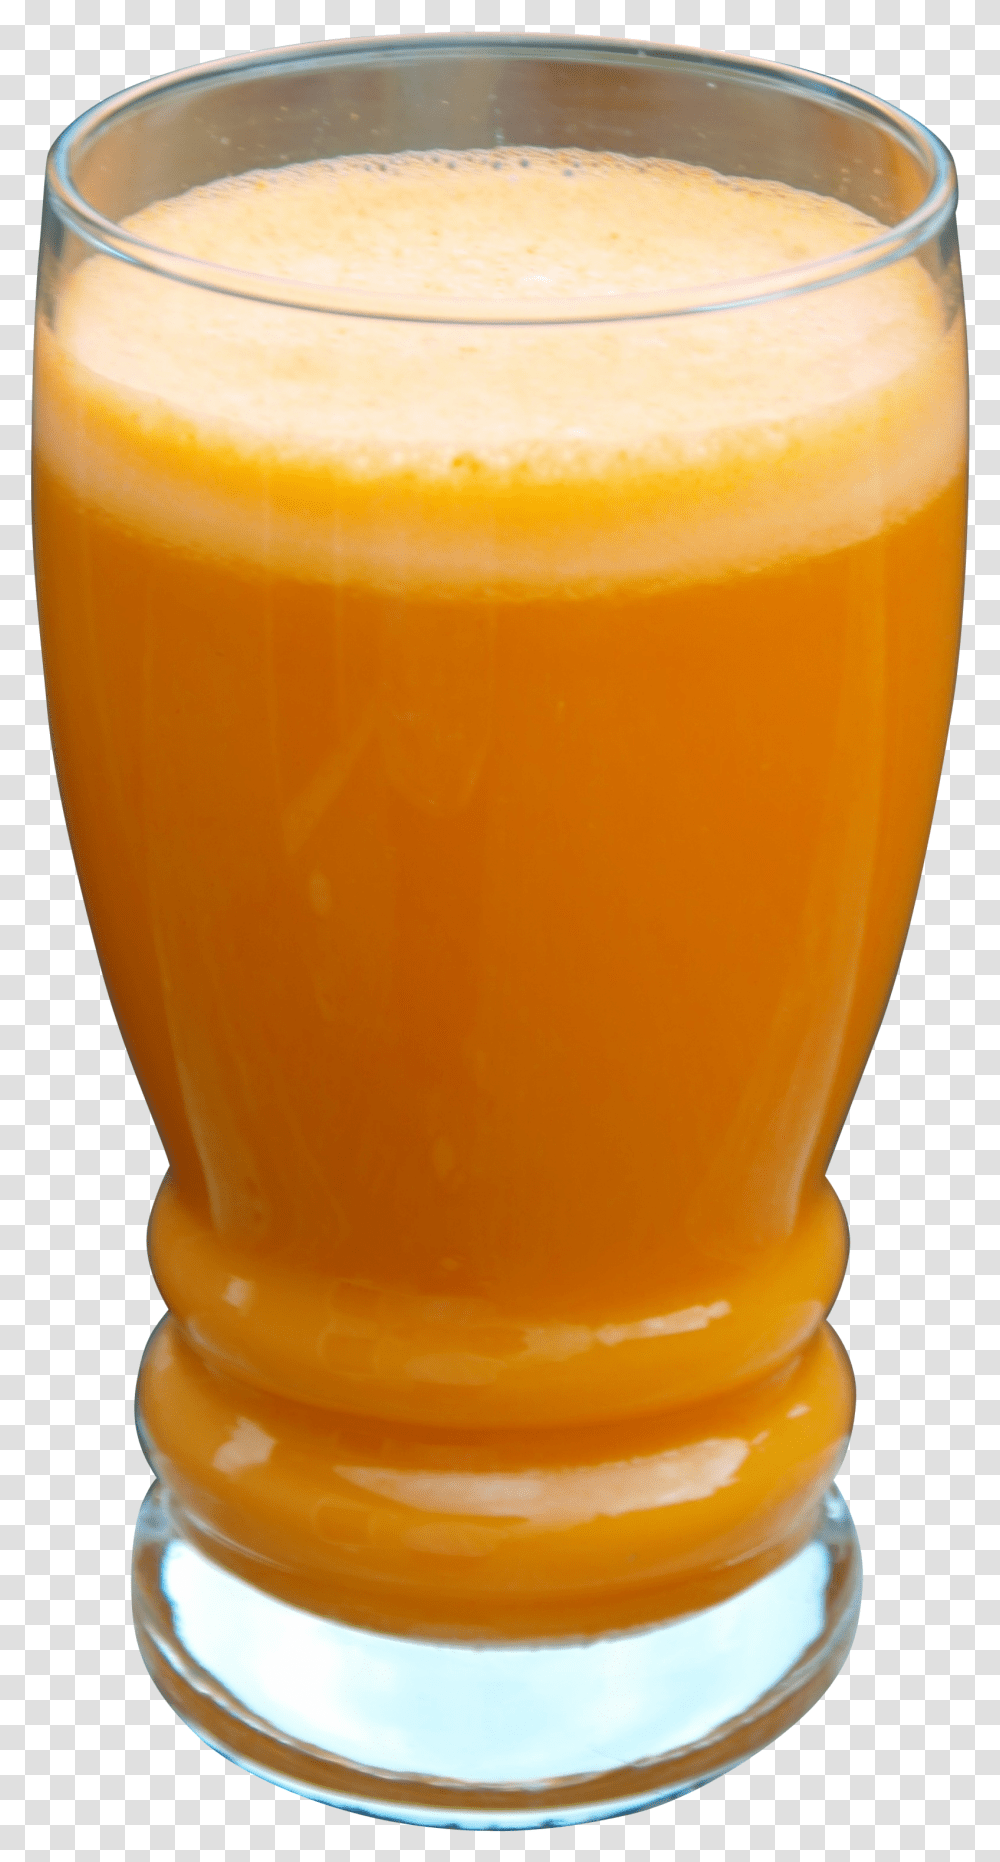 Glass Filled With Orange Carrot Juice Carrot Juice Background, Beer, Alcohol, Beverage, Drink Transparent Png